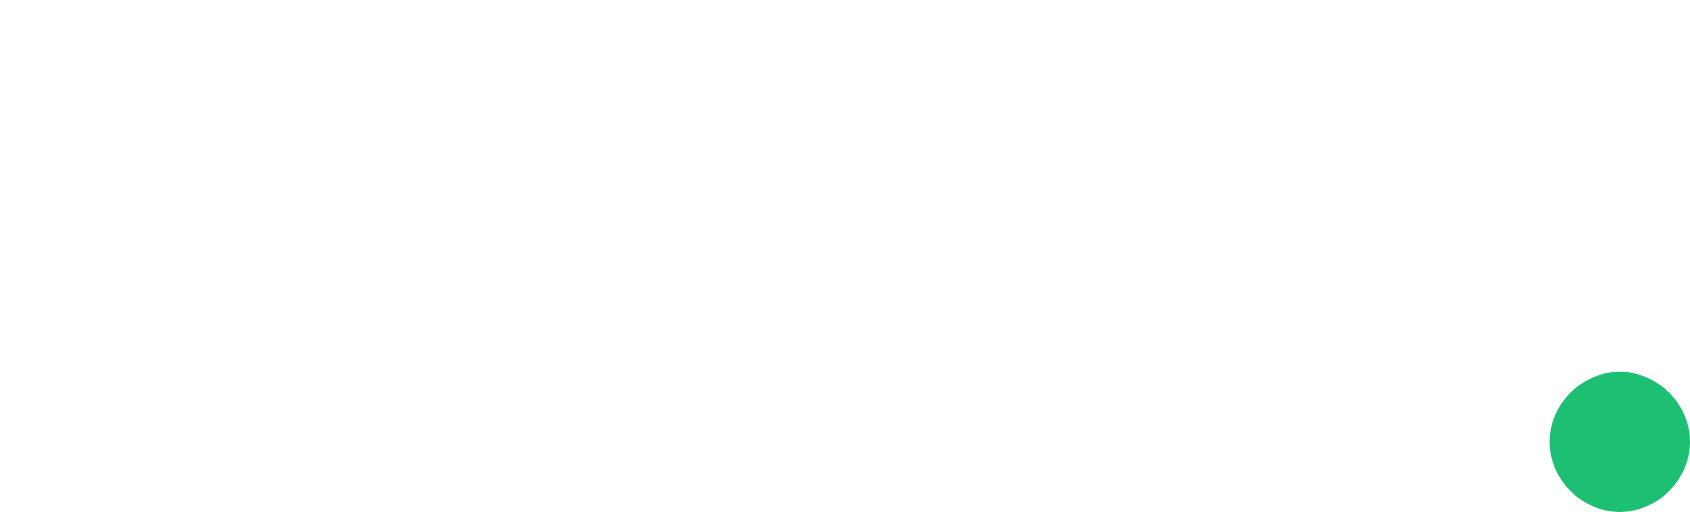 Fiverr Logo groß für dunkle Hintergründe (transparentes PNG)